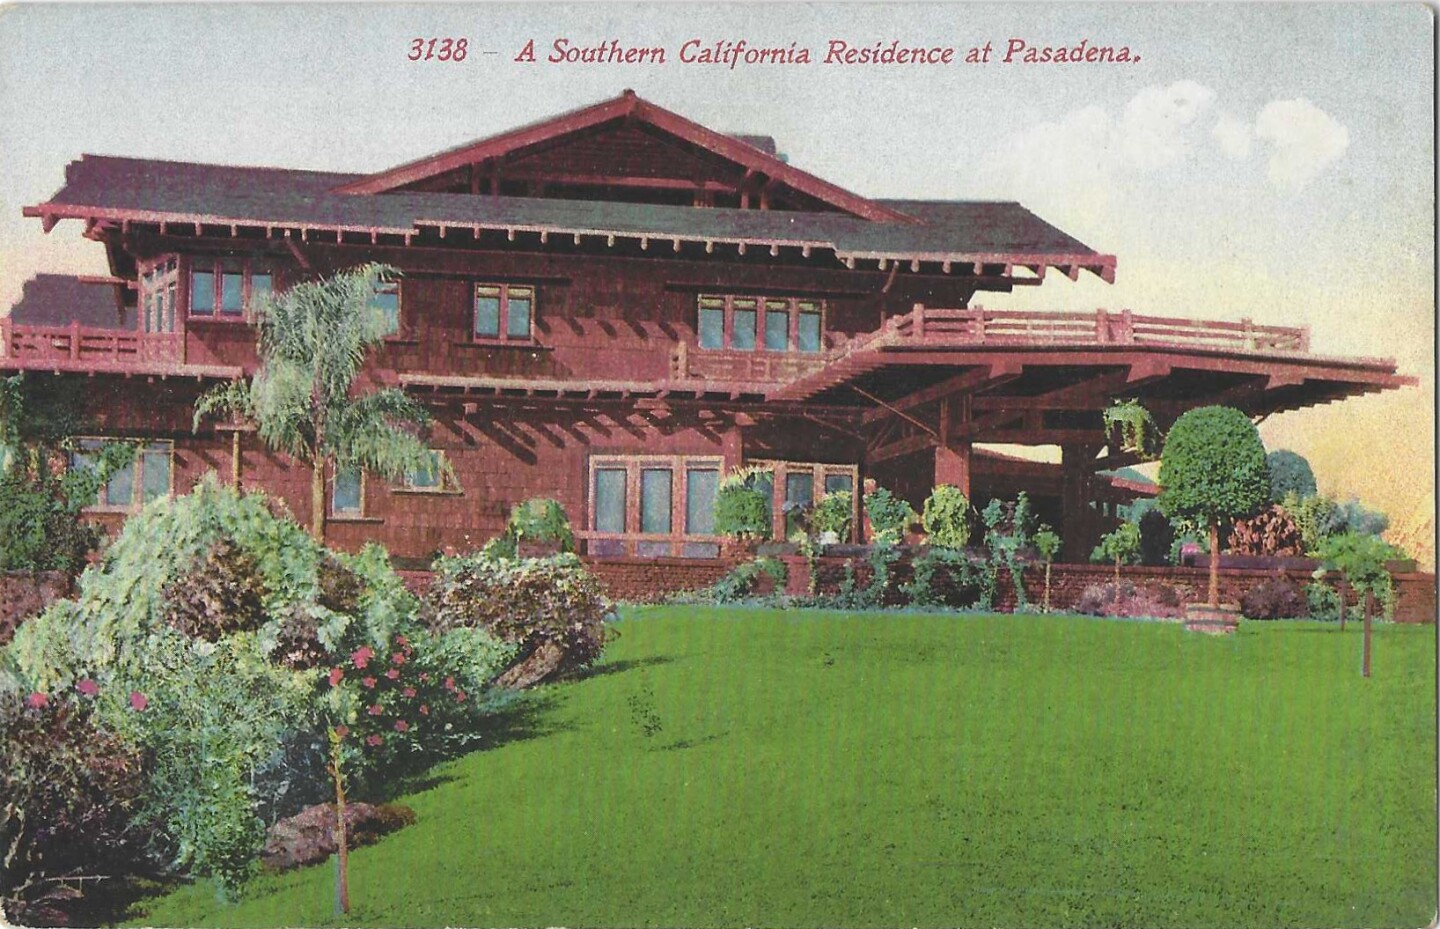 Vintage postcard: "A Southern California Residence at Pasadena"